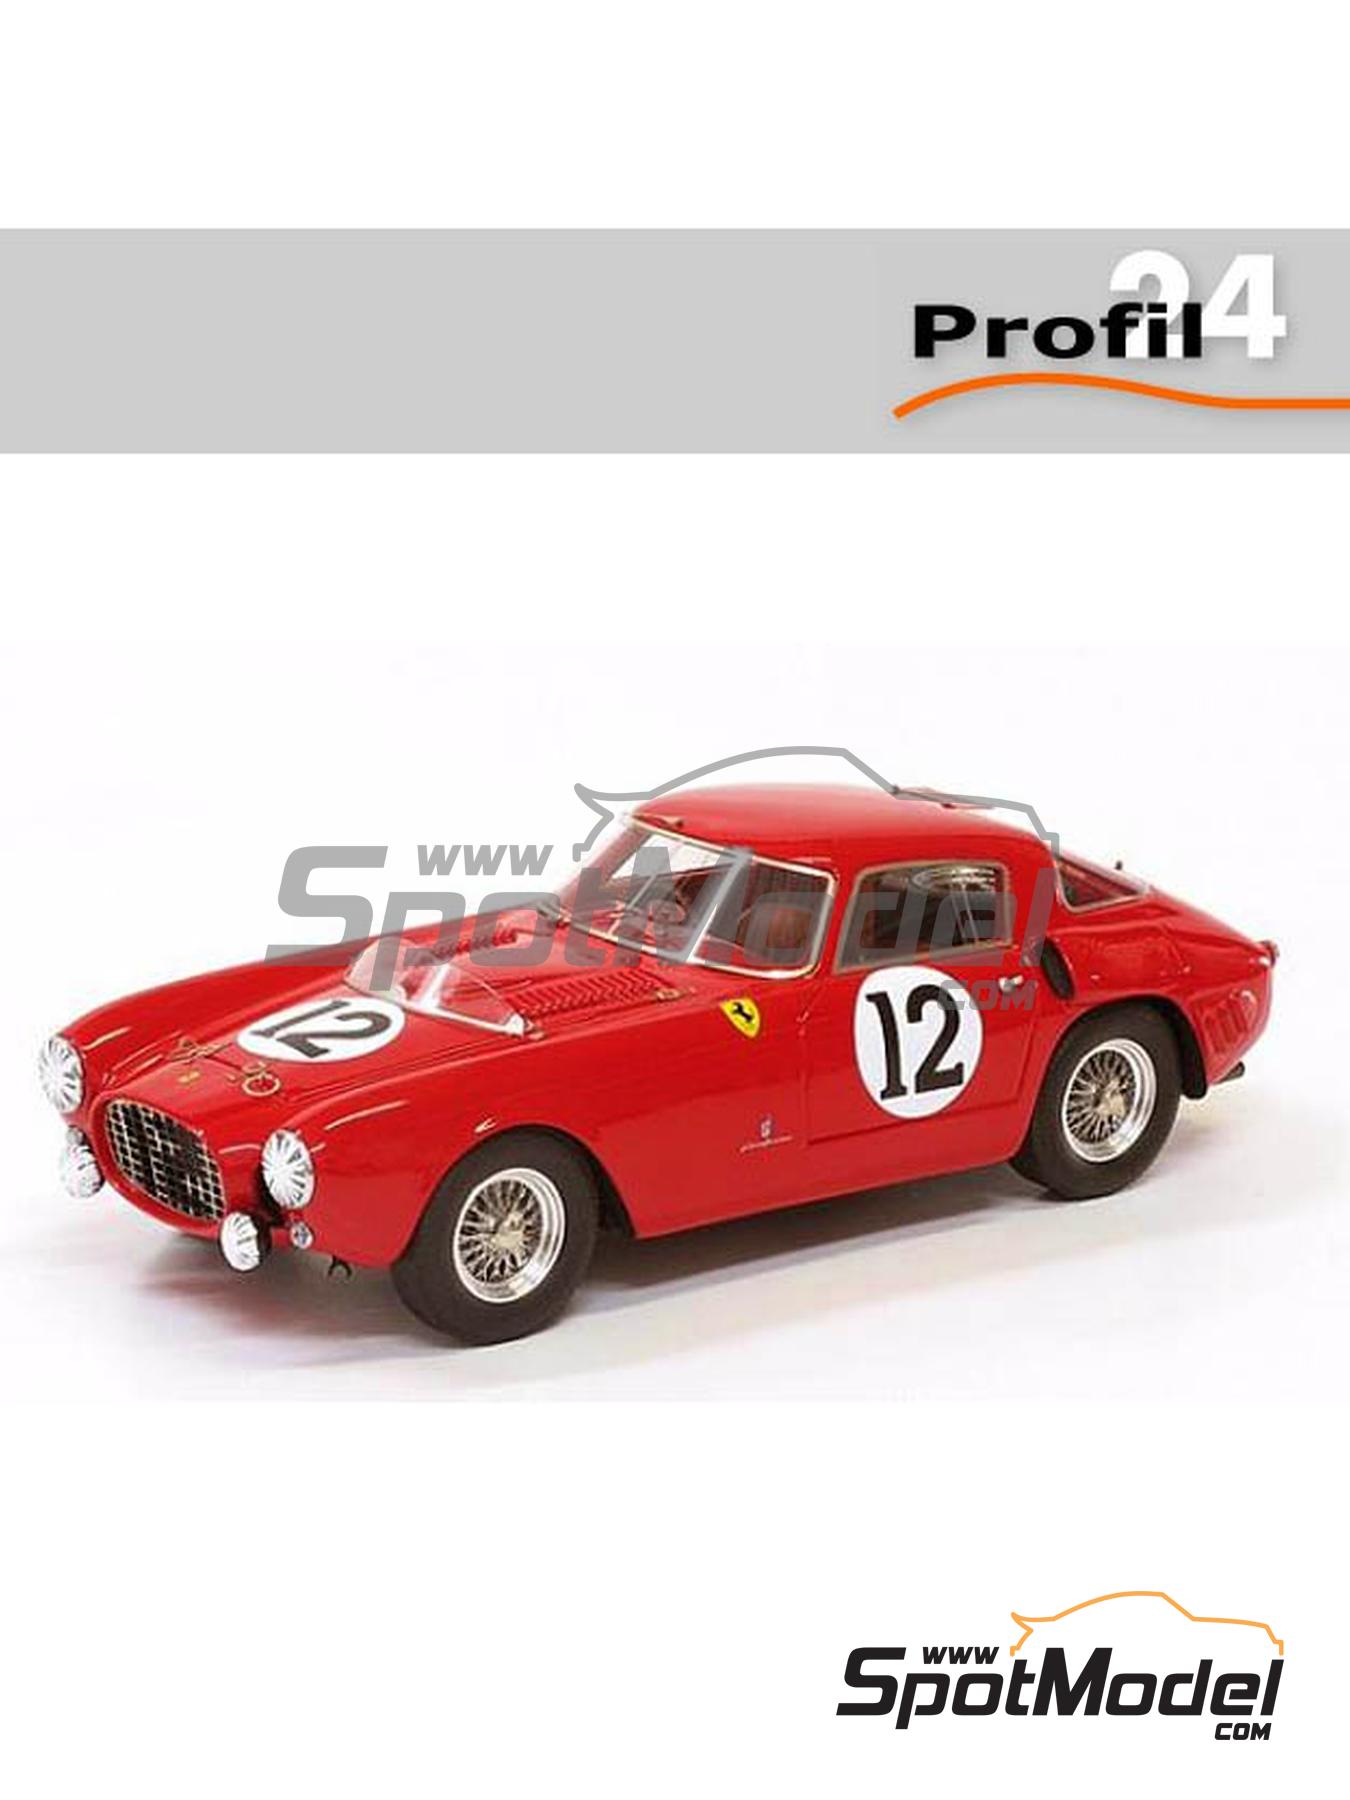 1/24 Ferrari 340-375 MM Le mans 1953 model kit car Profil 24 models